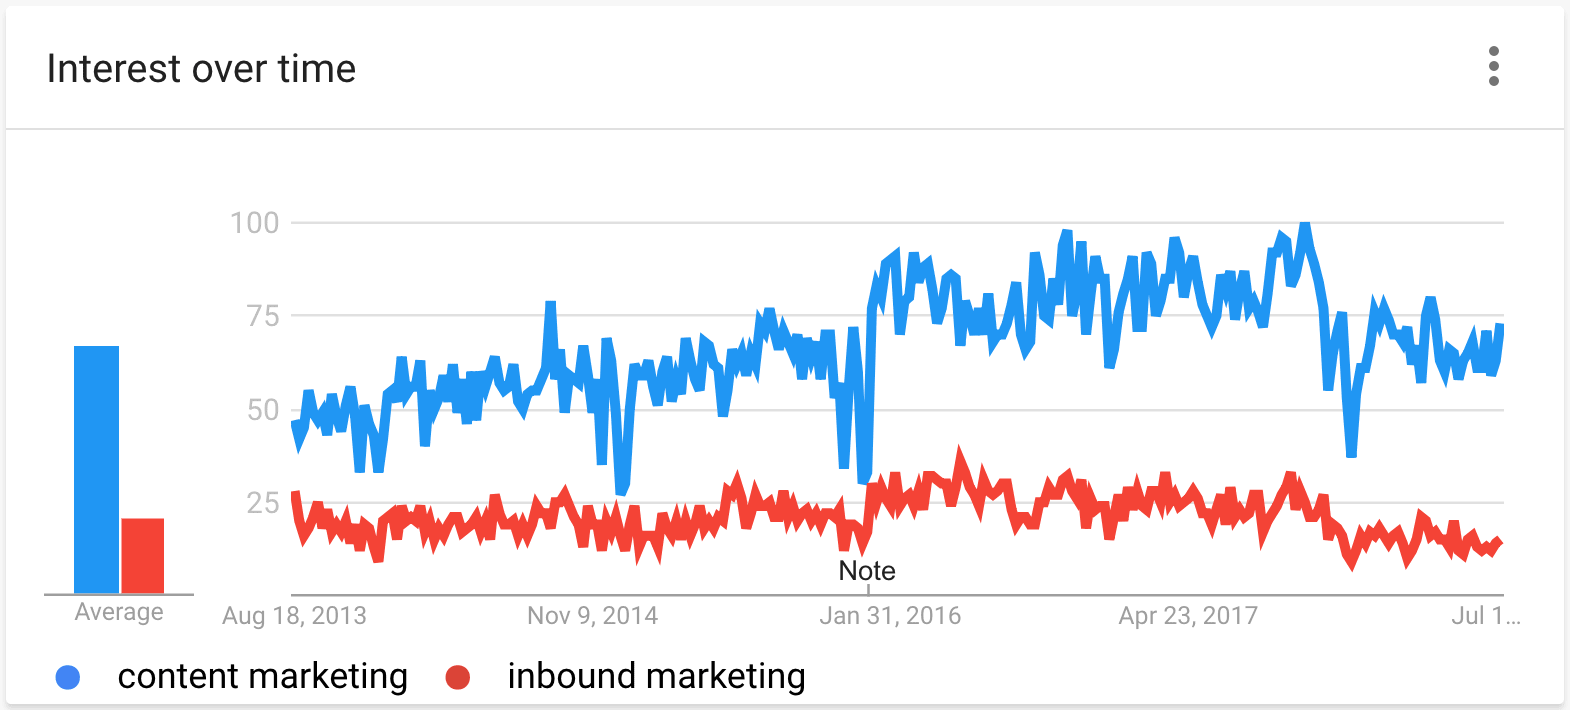 Google Trends – Interest over time – Comparison